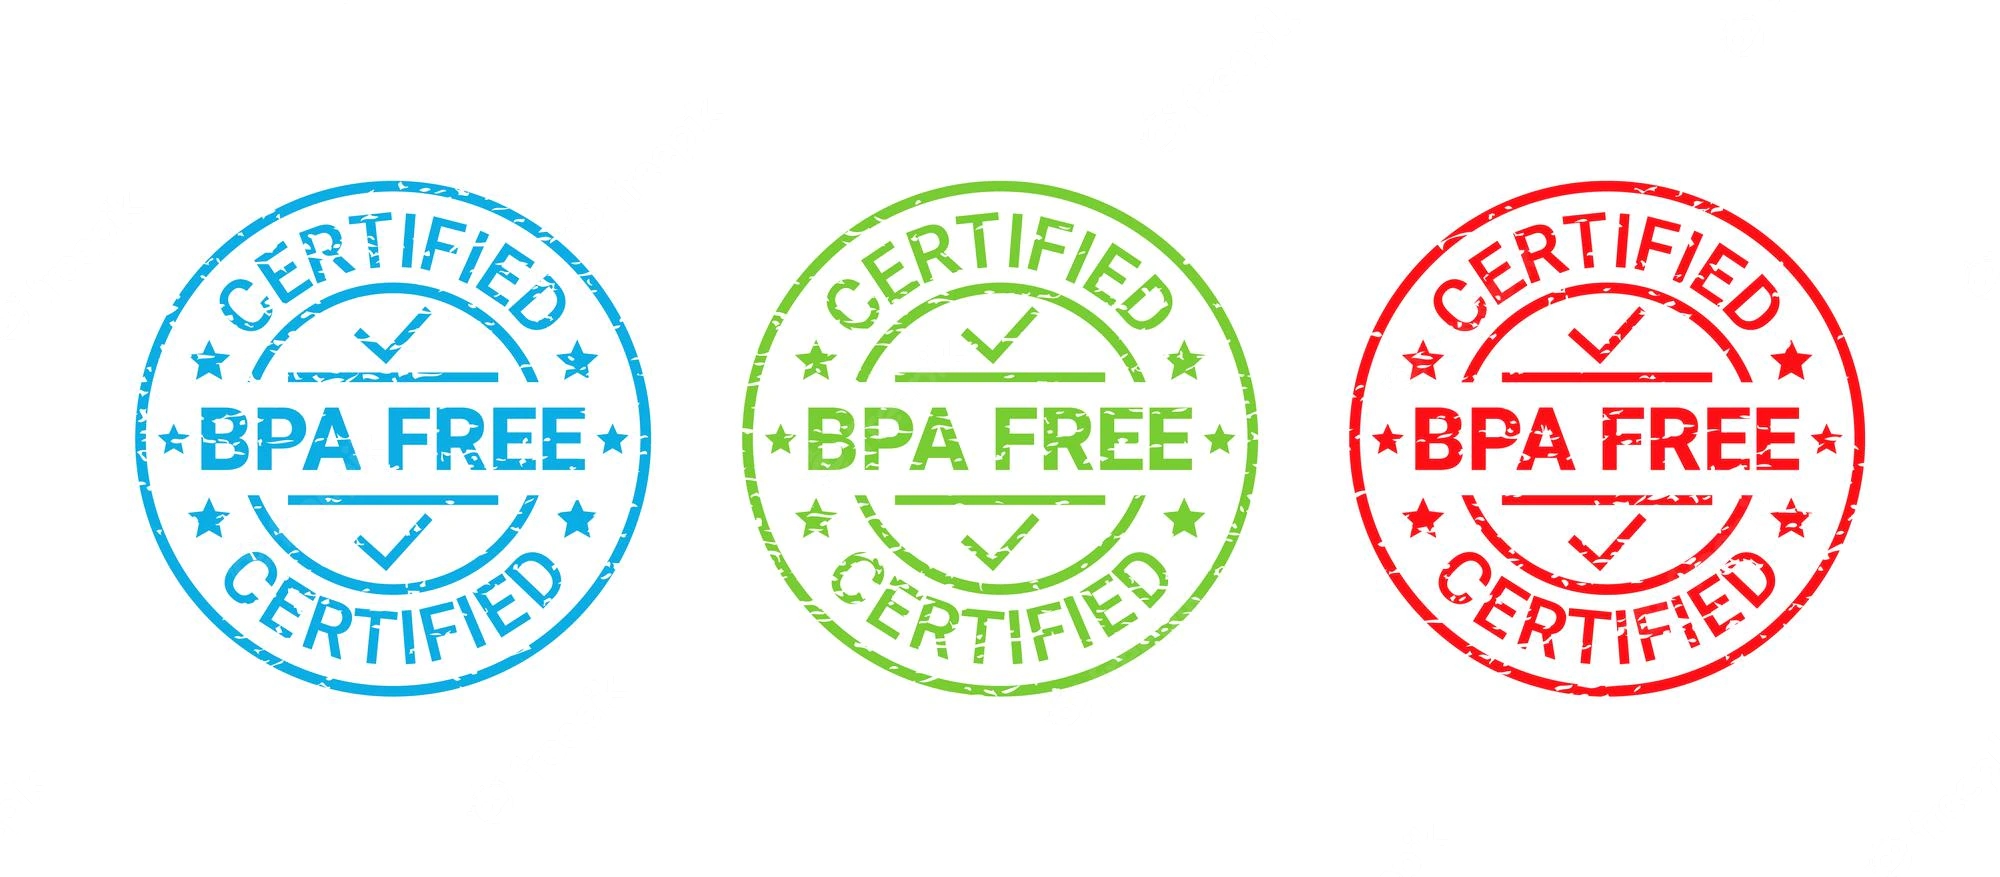 bpa-free-badge-stamp-ne-toksa-plasta-emblemo-eco-packaging-sticker-vector-illustration_171867-1086.webp